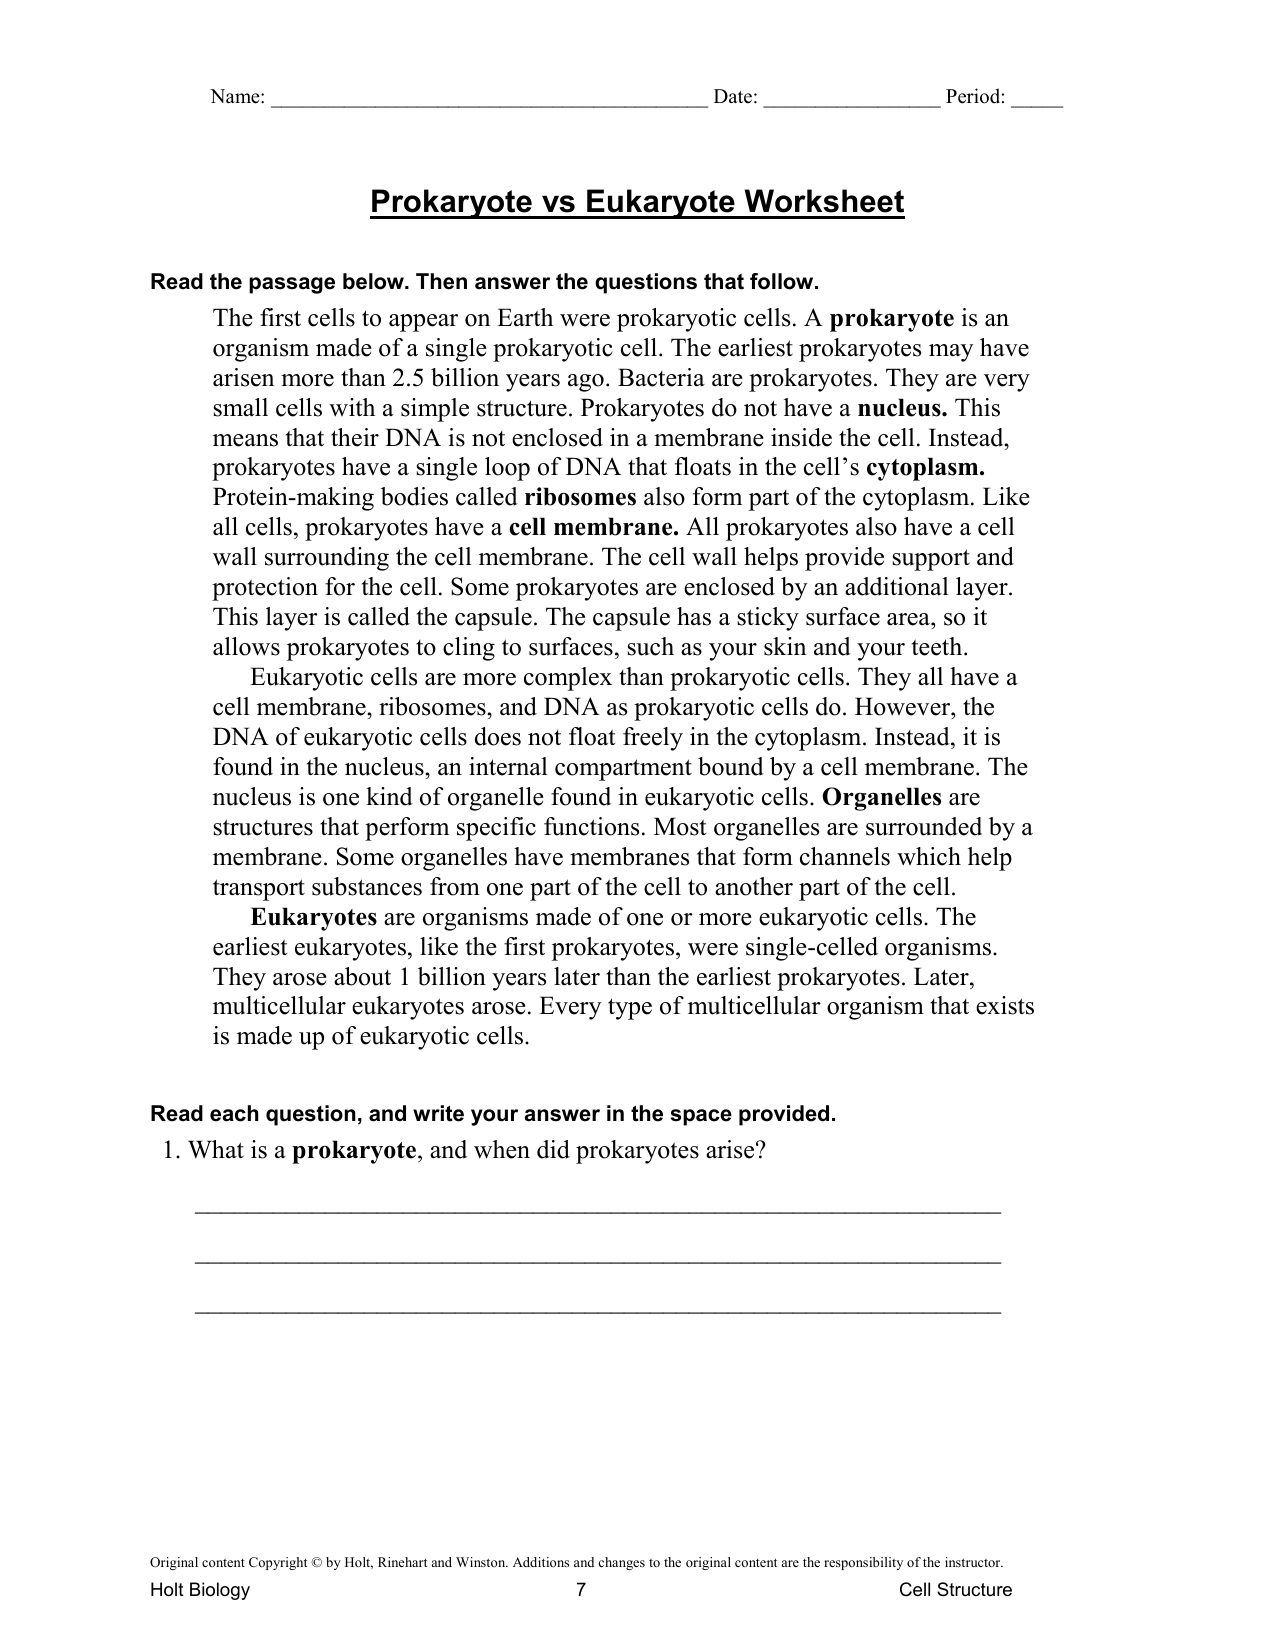 Prokaryote vs. Eukaryote Worksheet Regarding Prokaryotes And Eukaryotes Worksheet